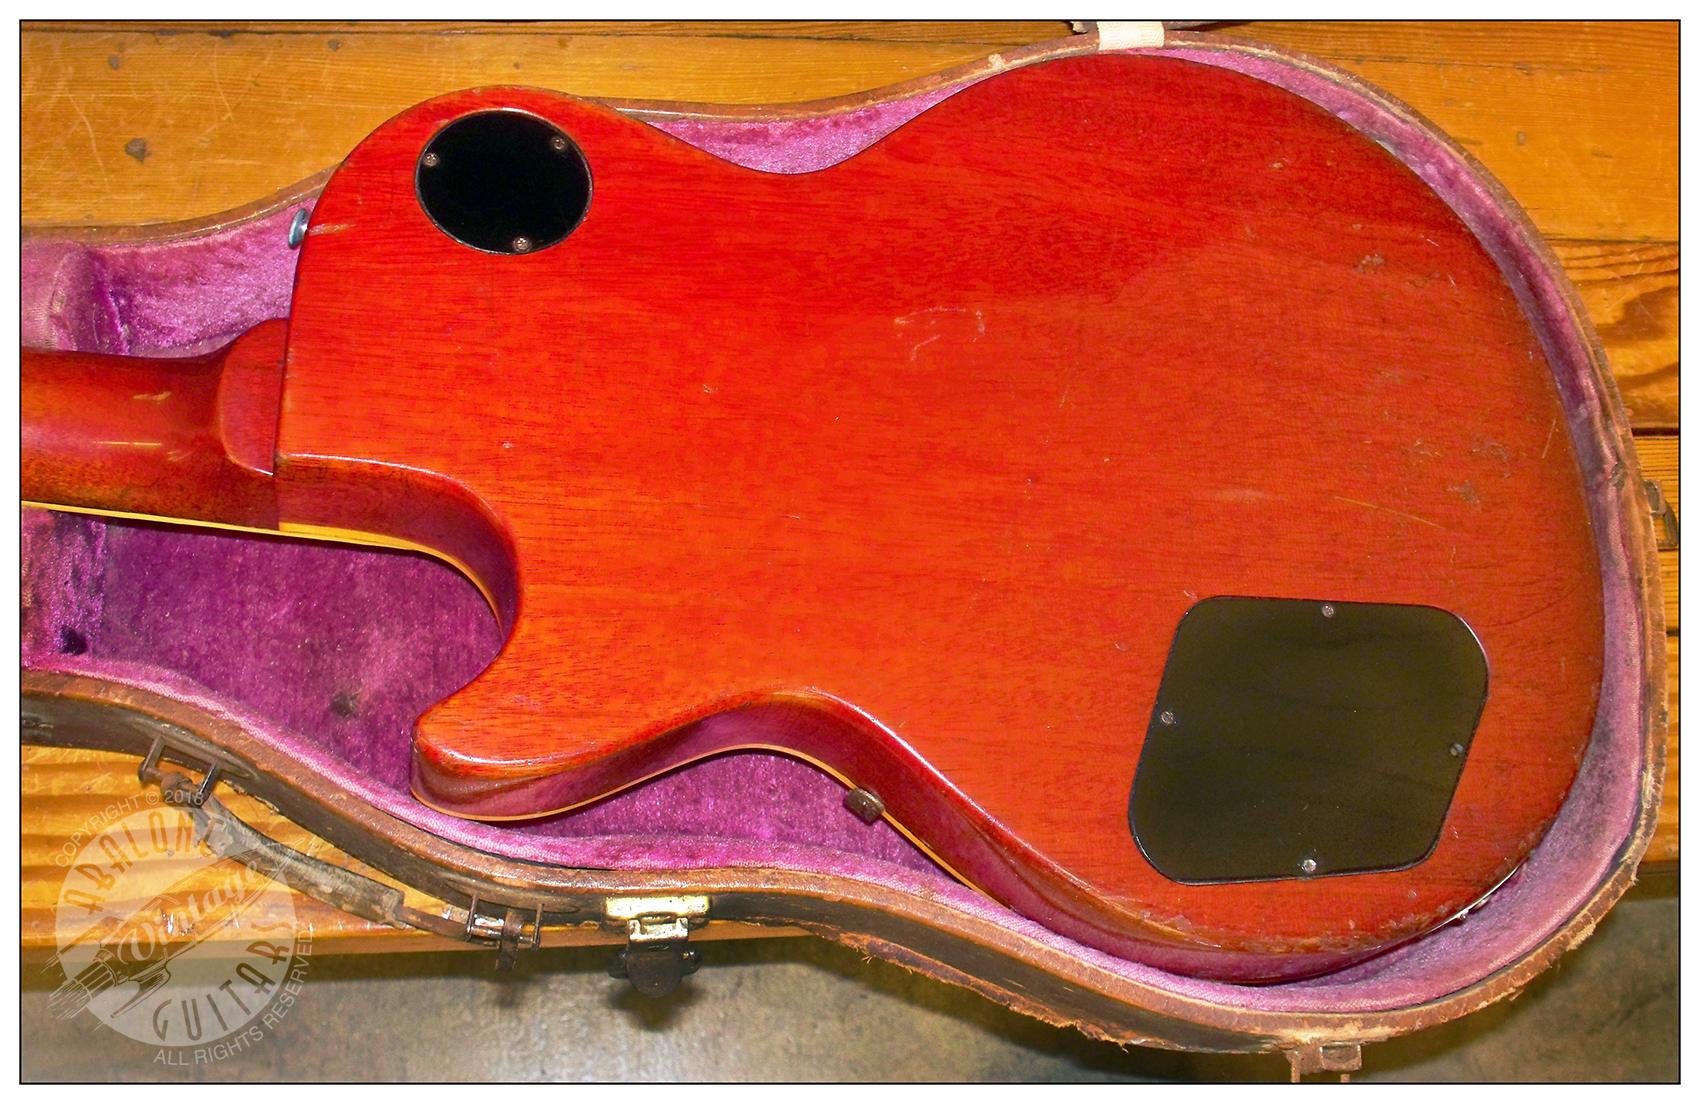 1958 Gibson Les Paul Standard Guitar. 8 5513 burst authentication expert original rare old